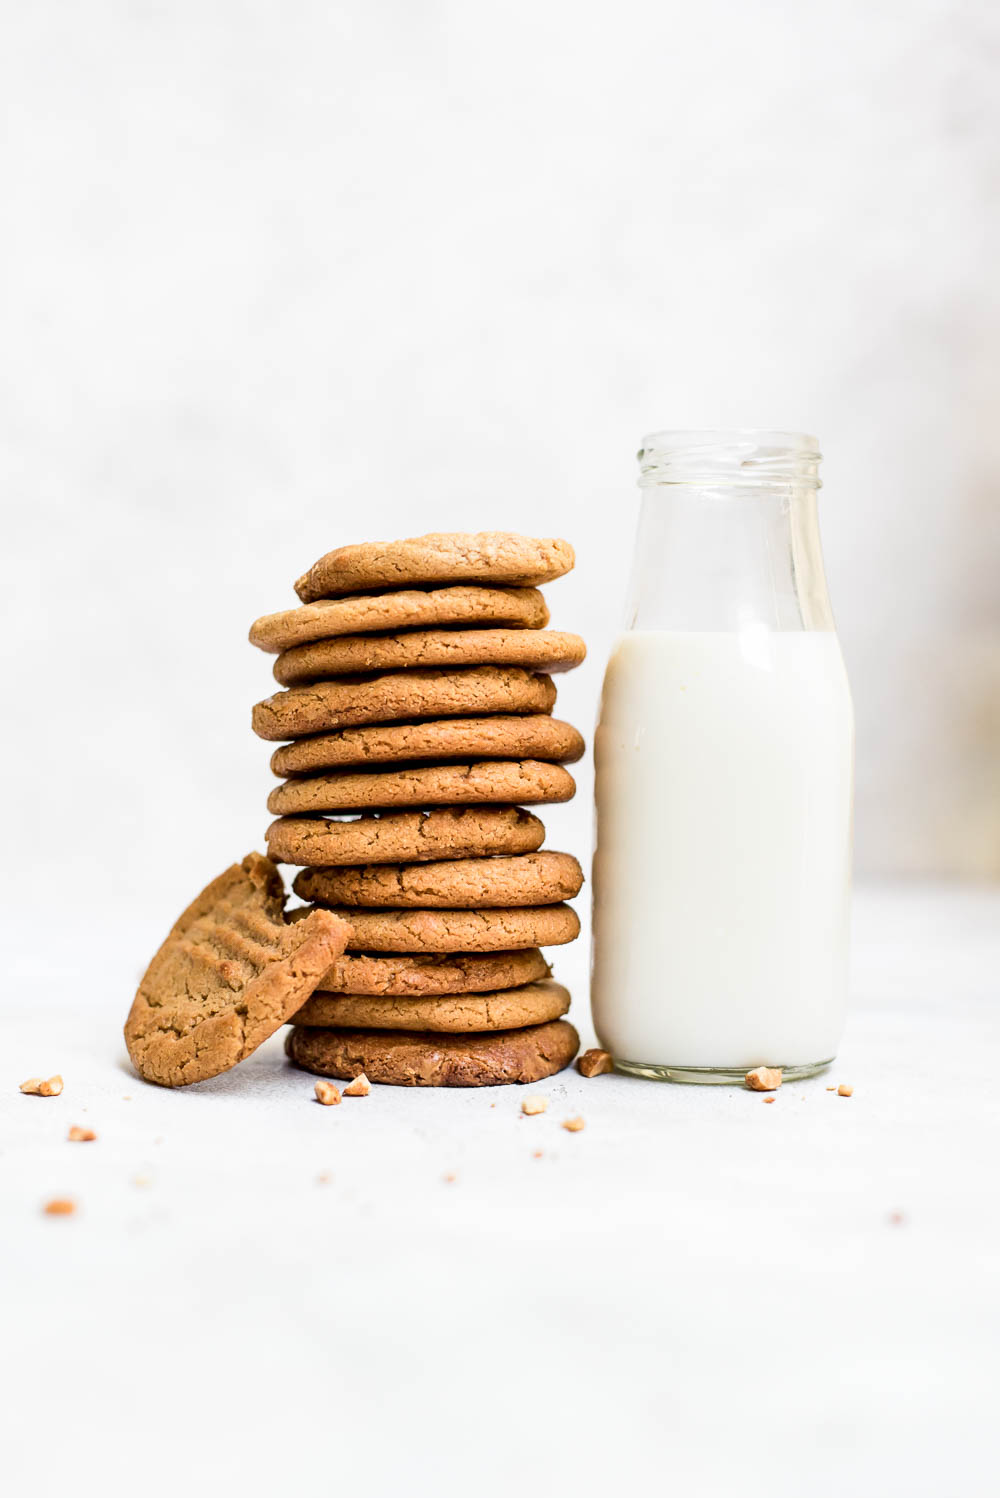 3 ingredient peanut butter cookies stacked next to jug of milk